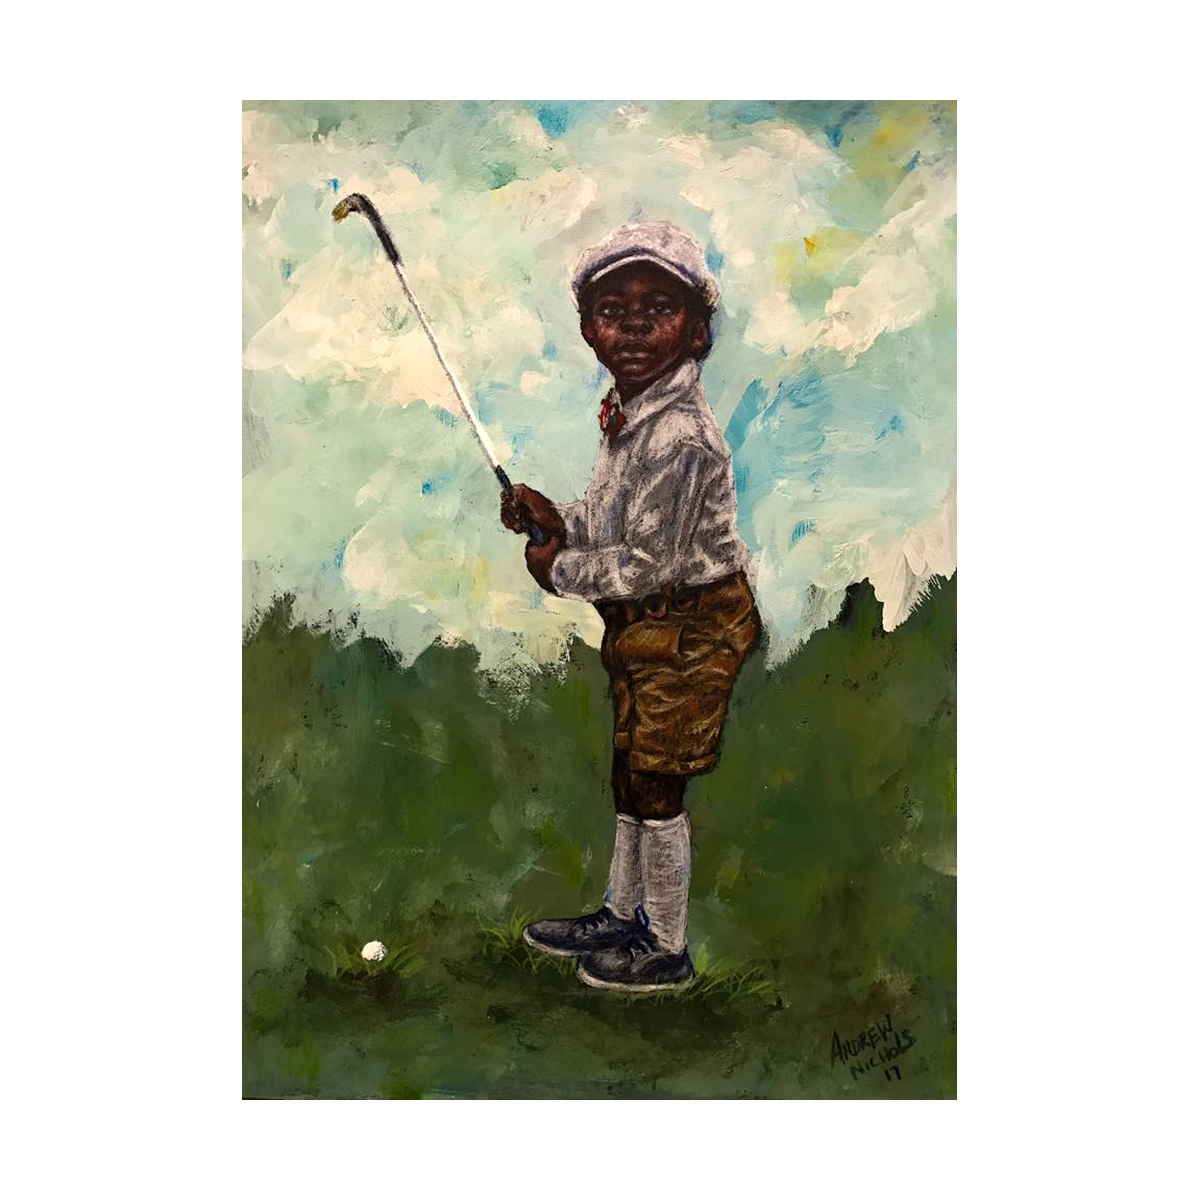 Lil' Golfer (Boy) by Andrew Nichols – The Black Art Depot